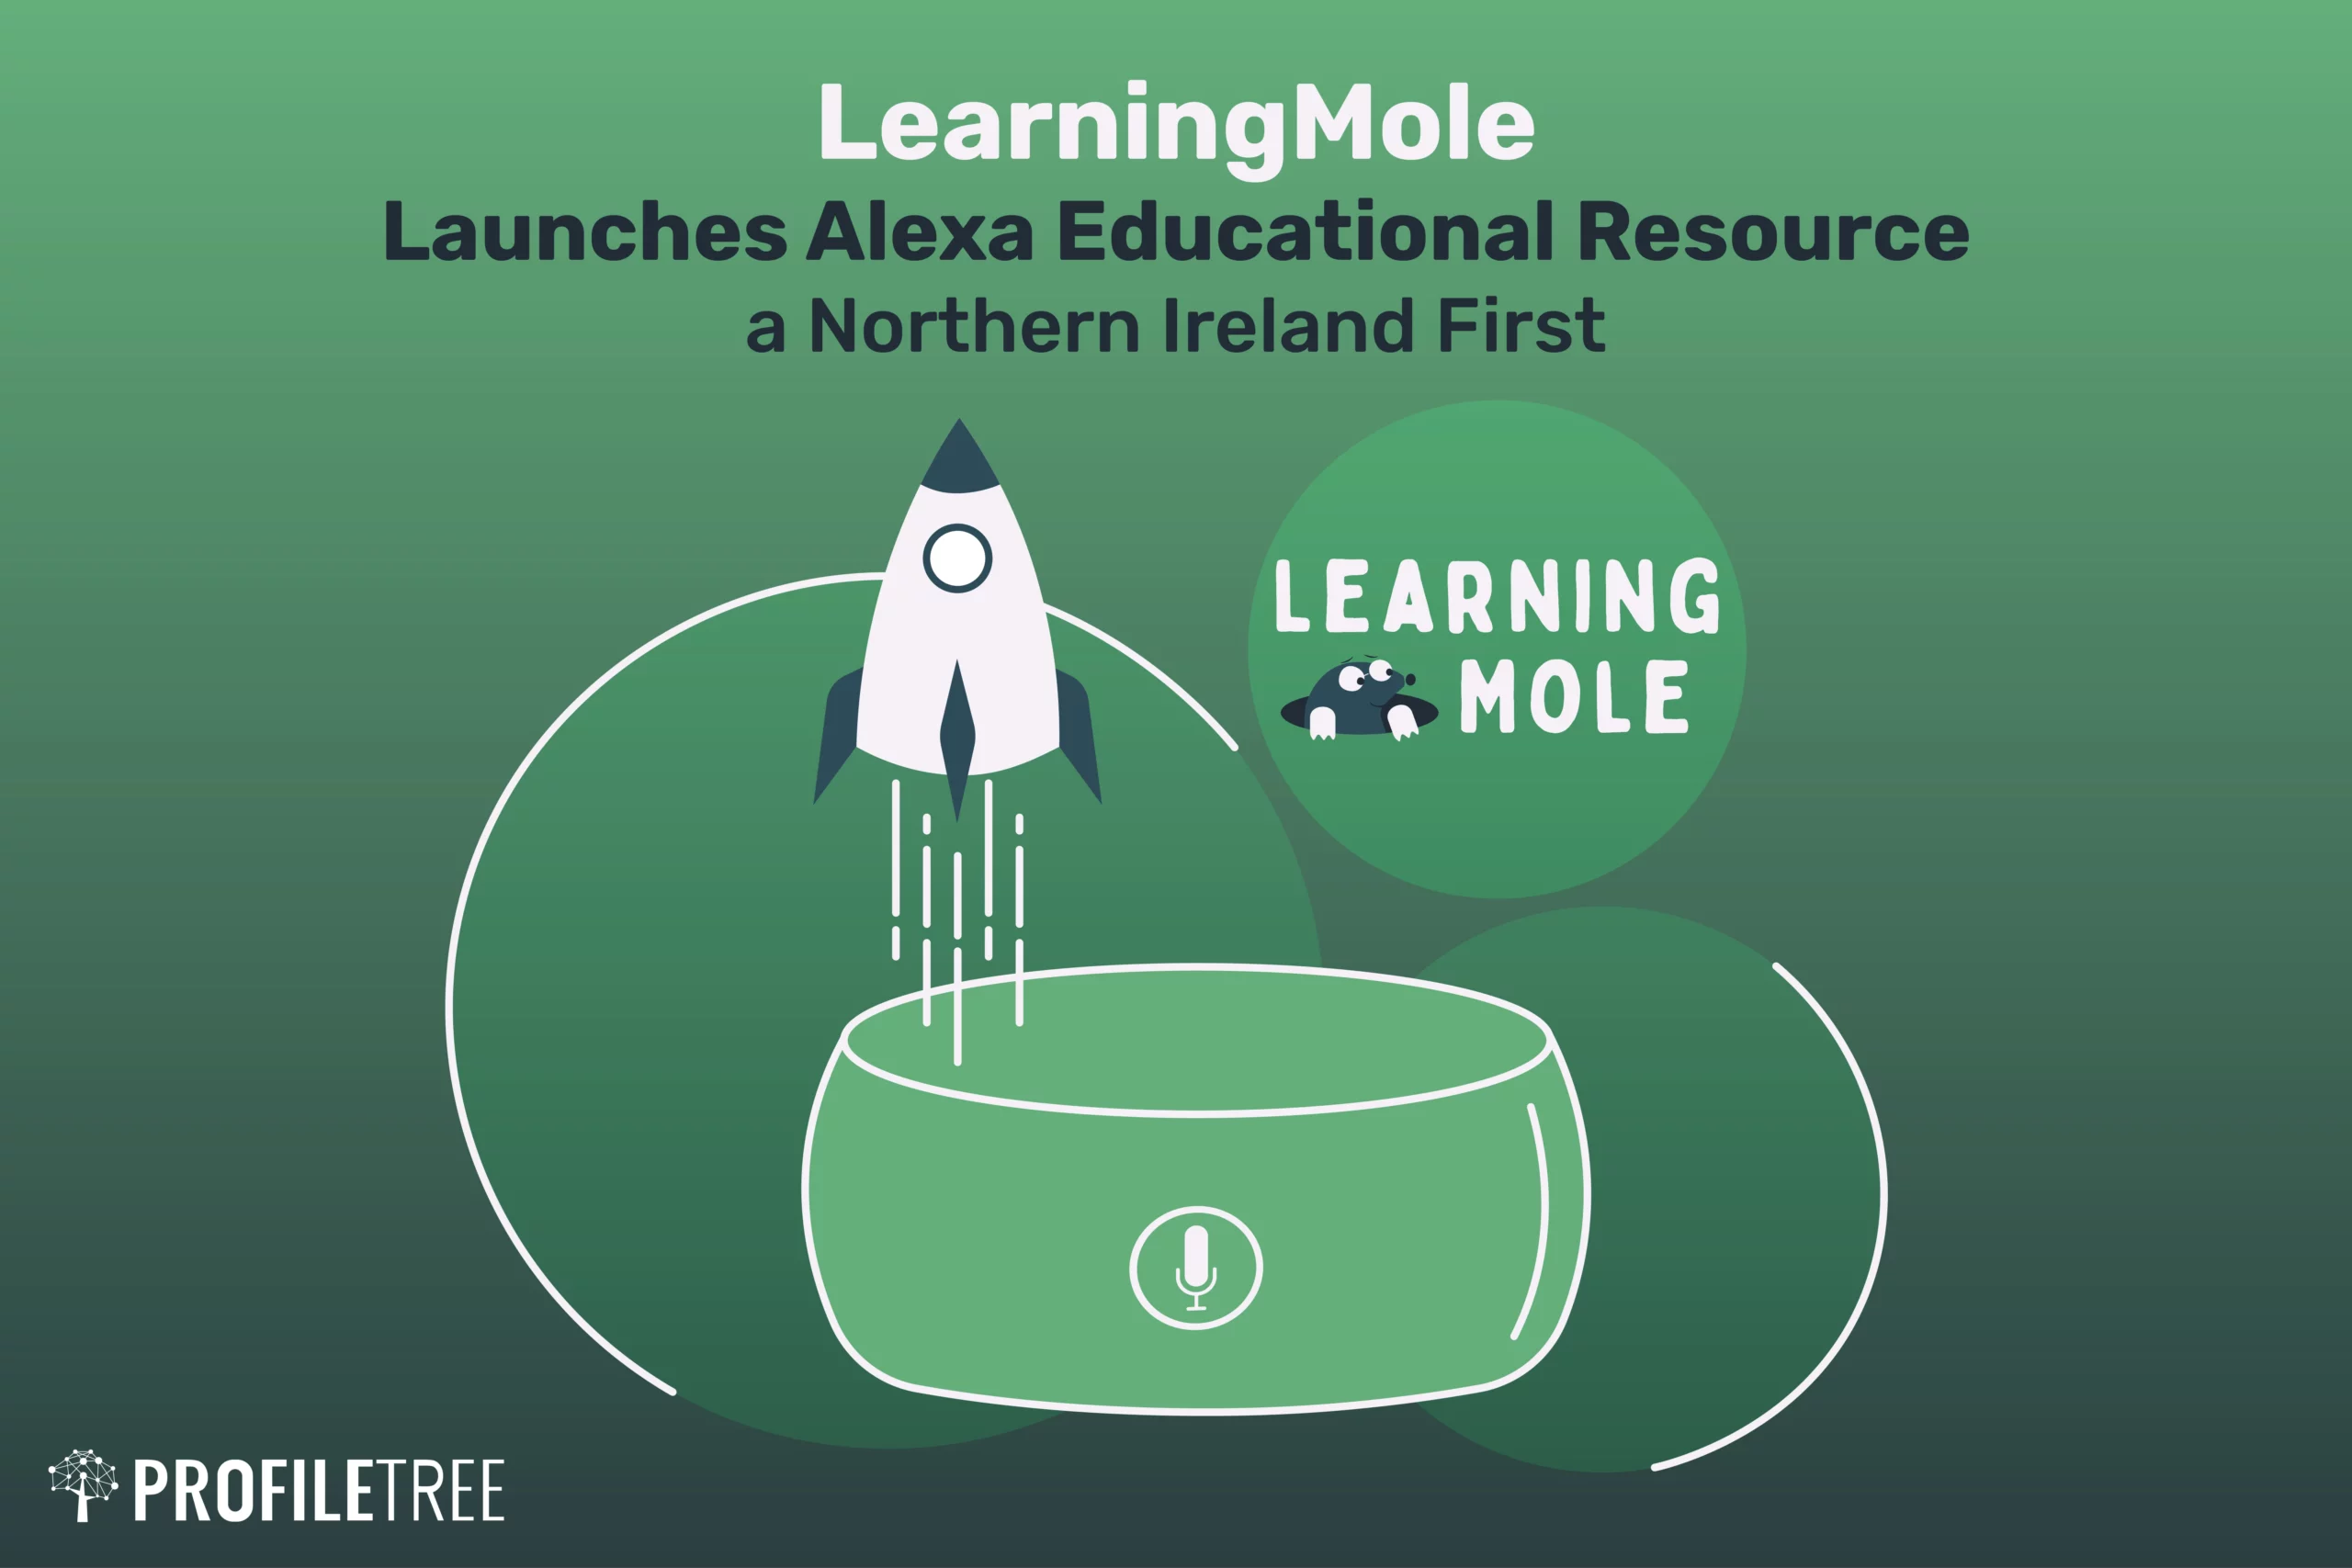 LearningMole Launches Alexa Educational Resource